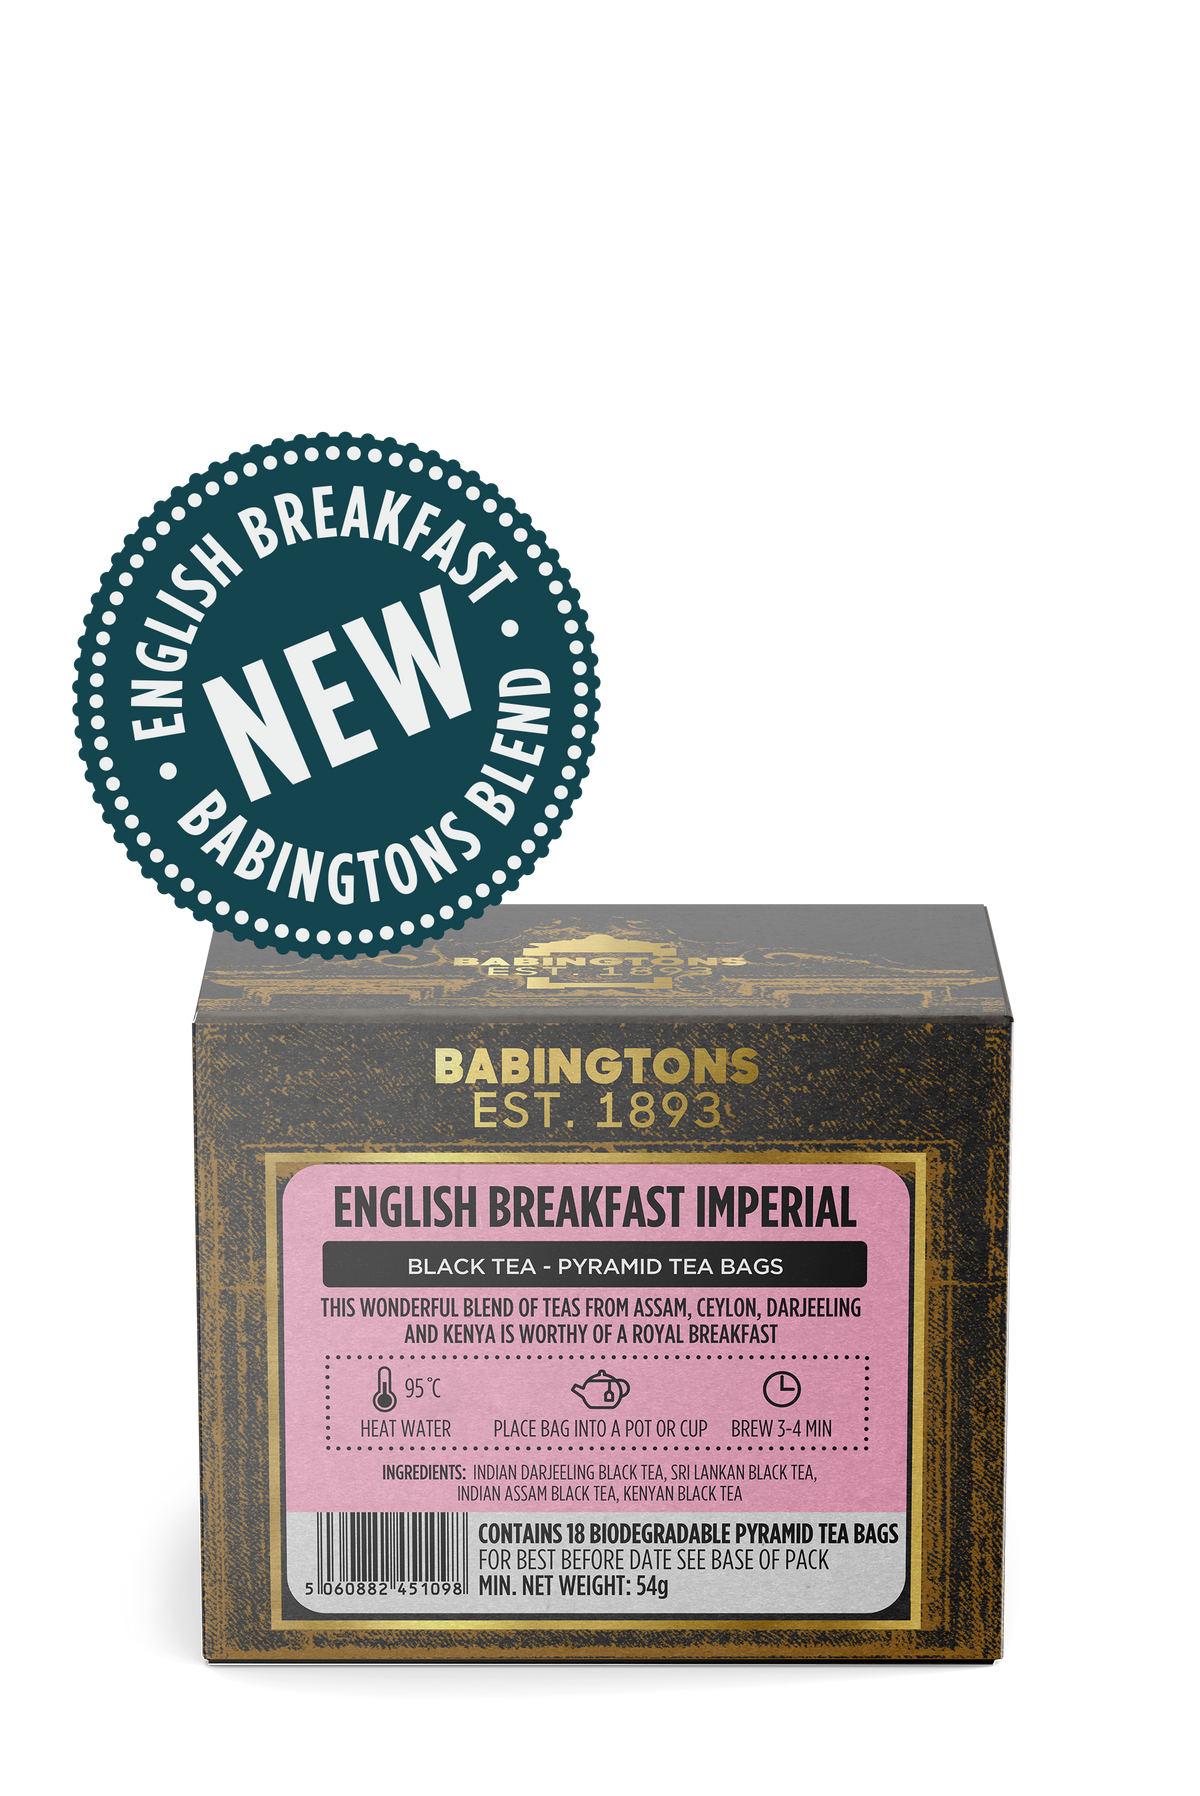 English Breakfast Imperial - Box: Tea bags